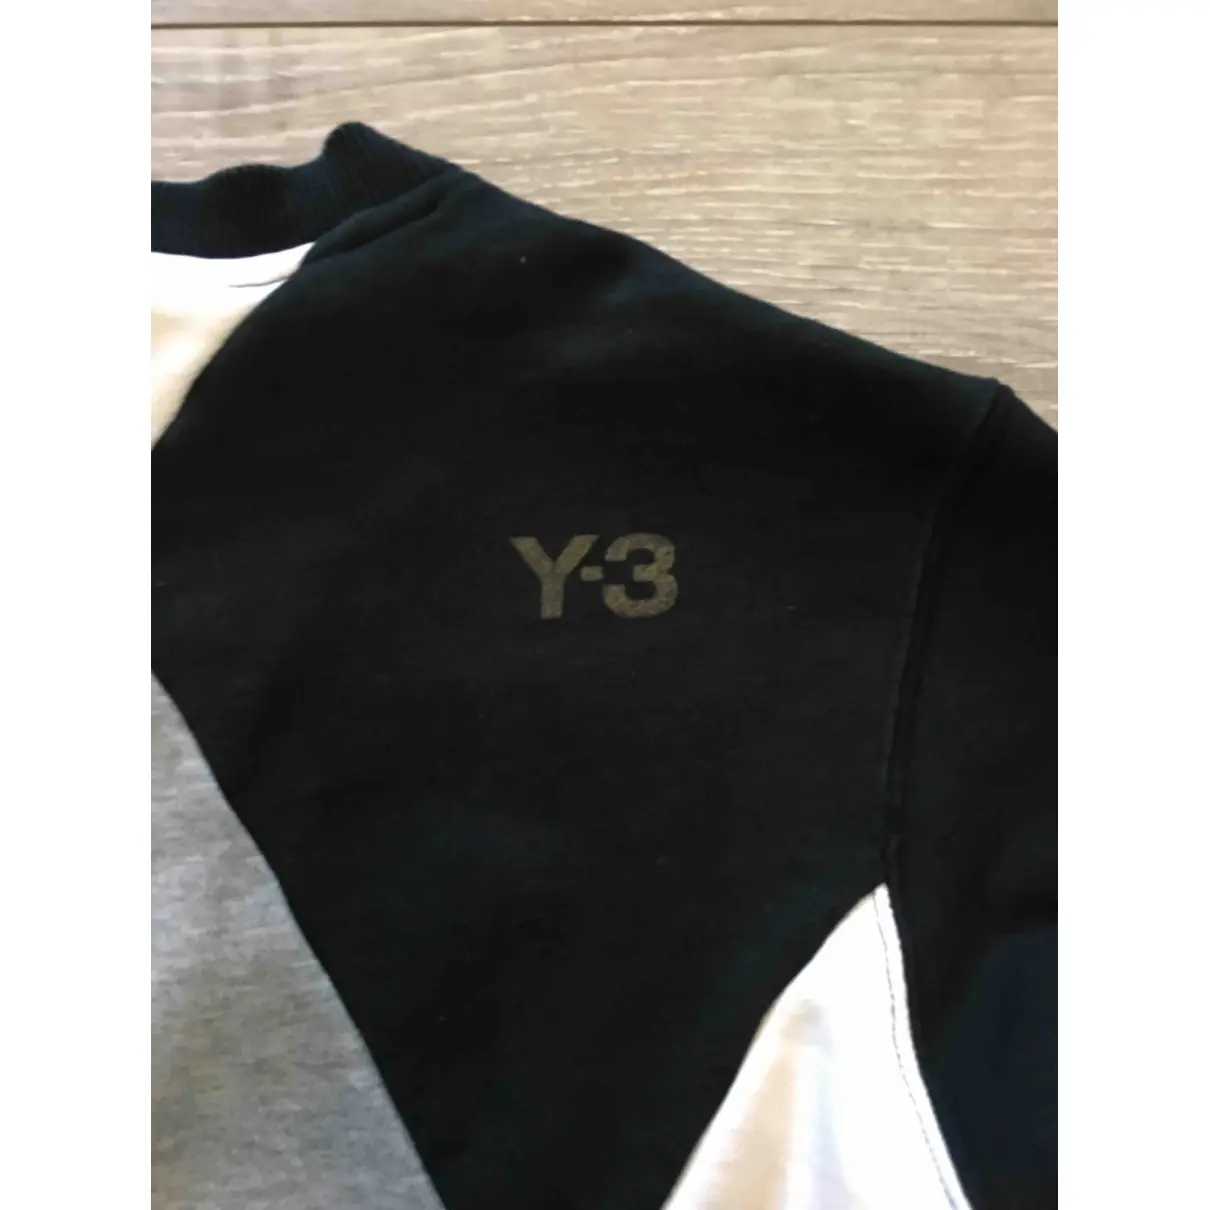 Buy Y-3 Black Cotton Knitwear online